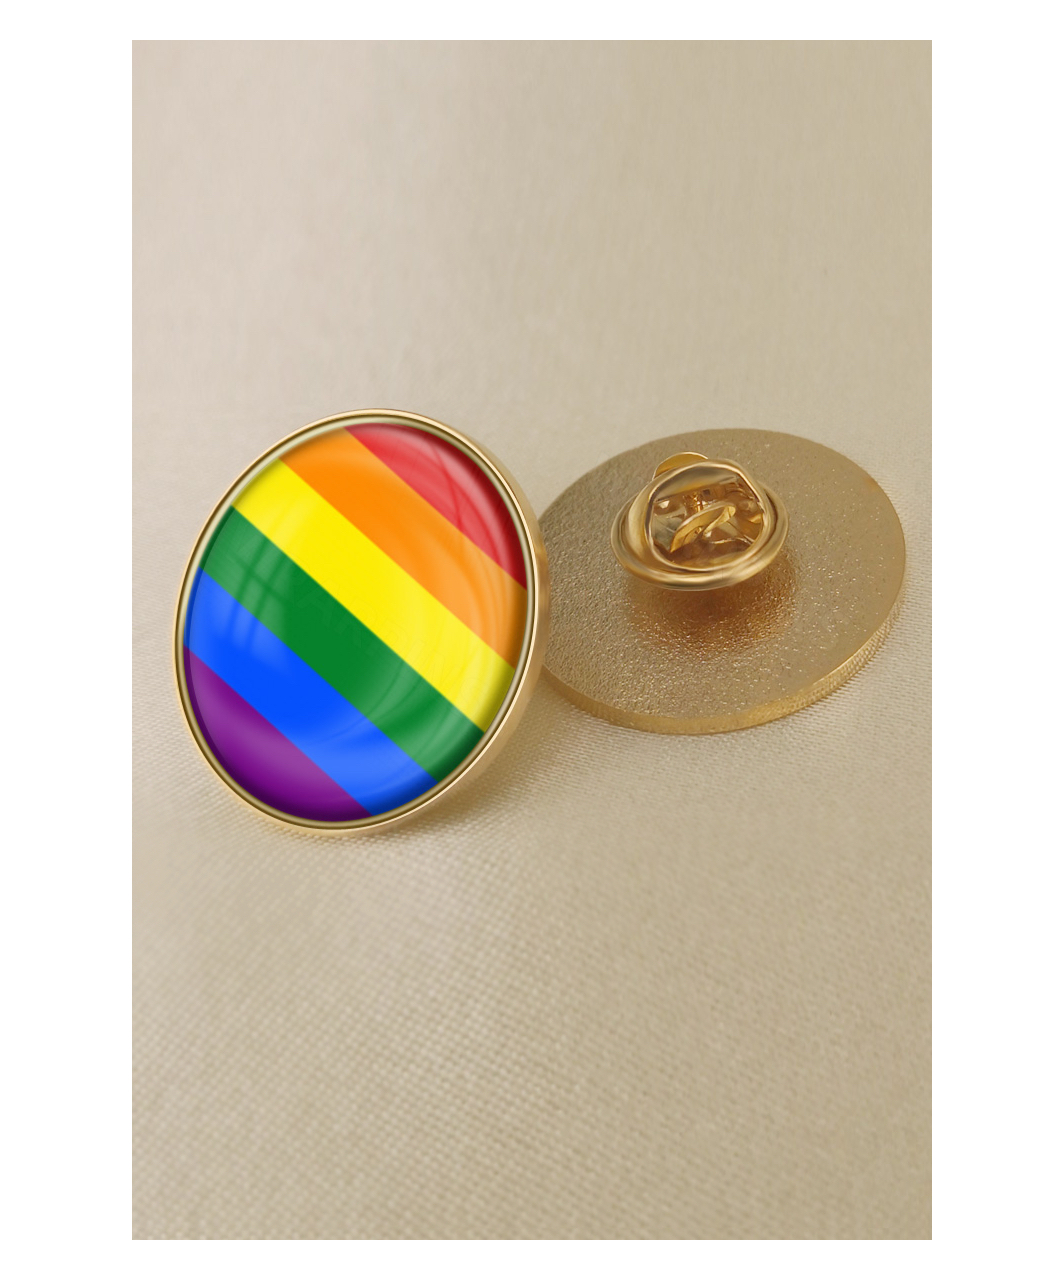 Rainbow Pride круглый петличный значок флага ЛГБТ